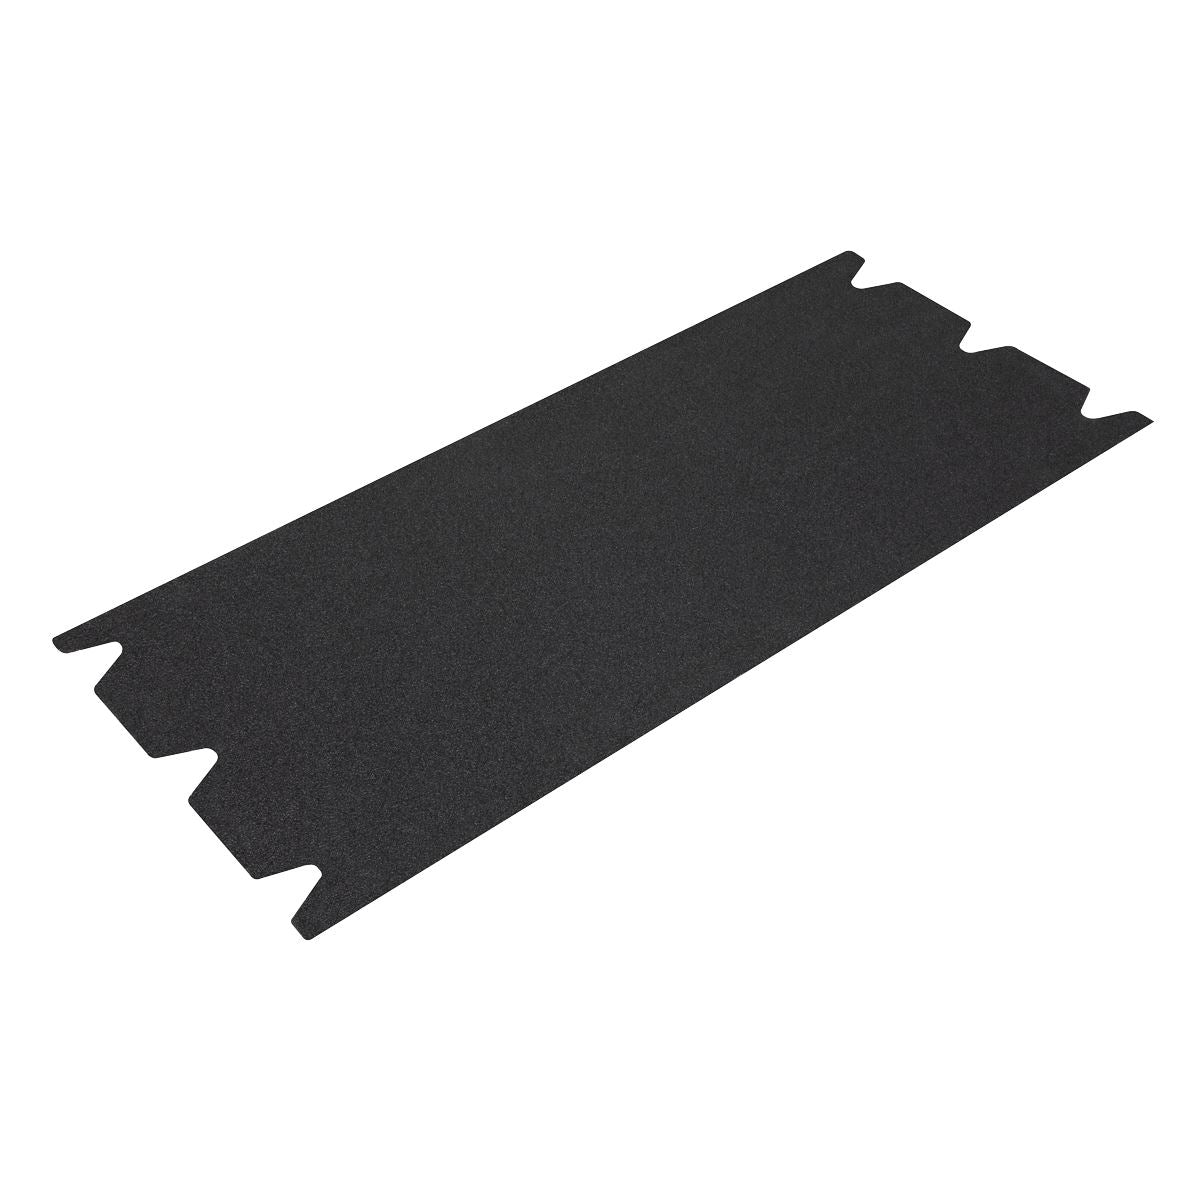 Sealey Floor Sanding Sheet 205 x 470mm 60Grit - Pack of 25